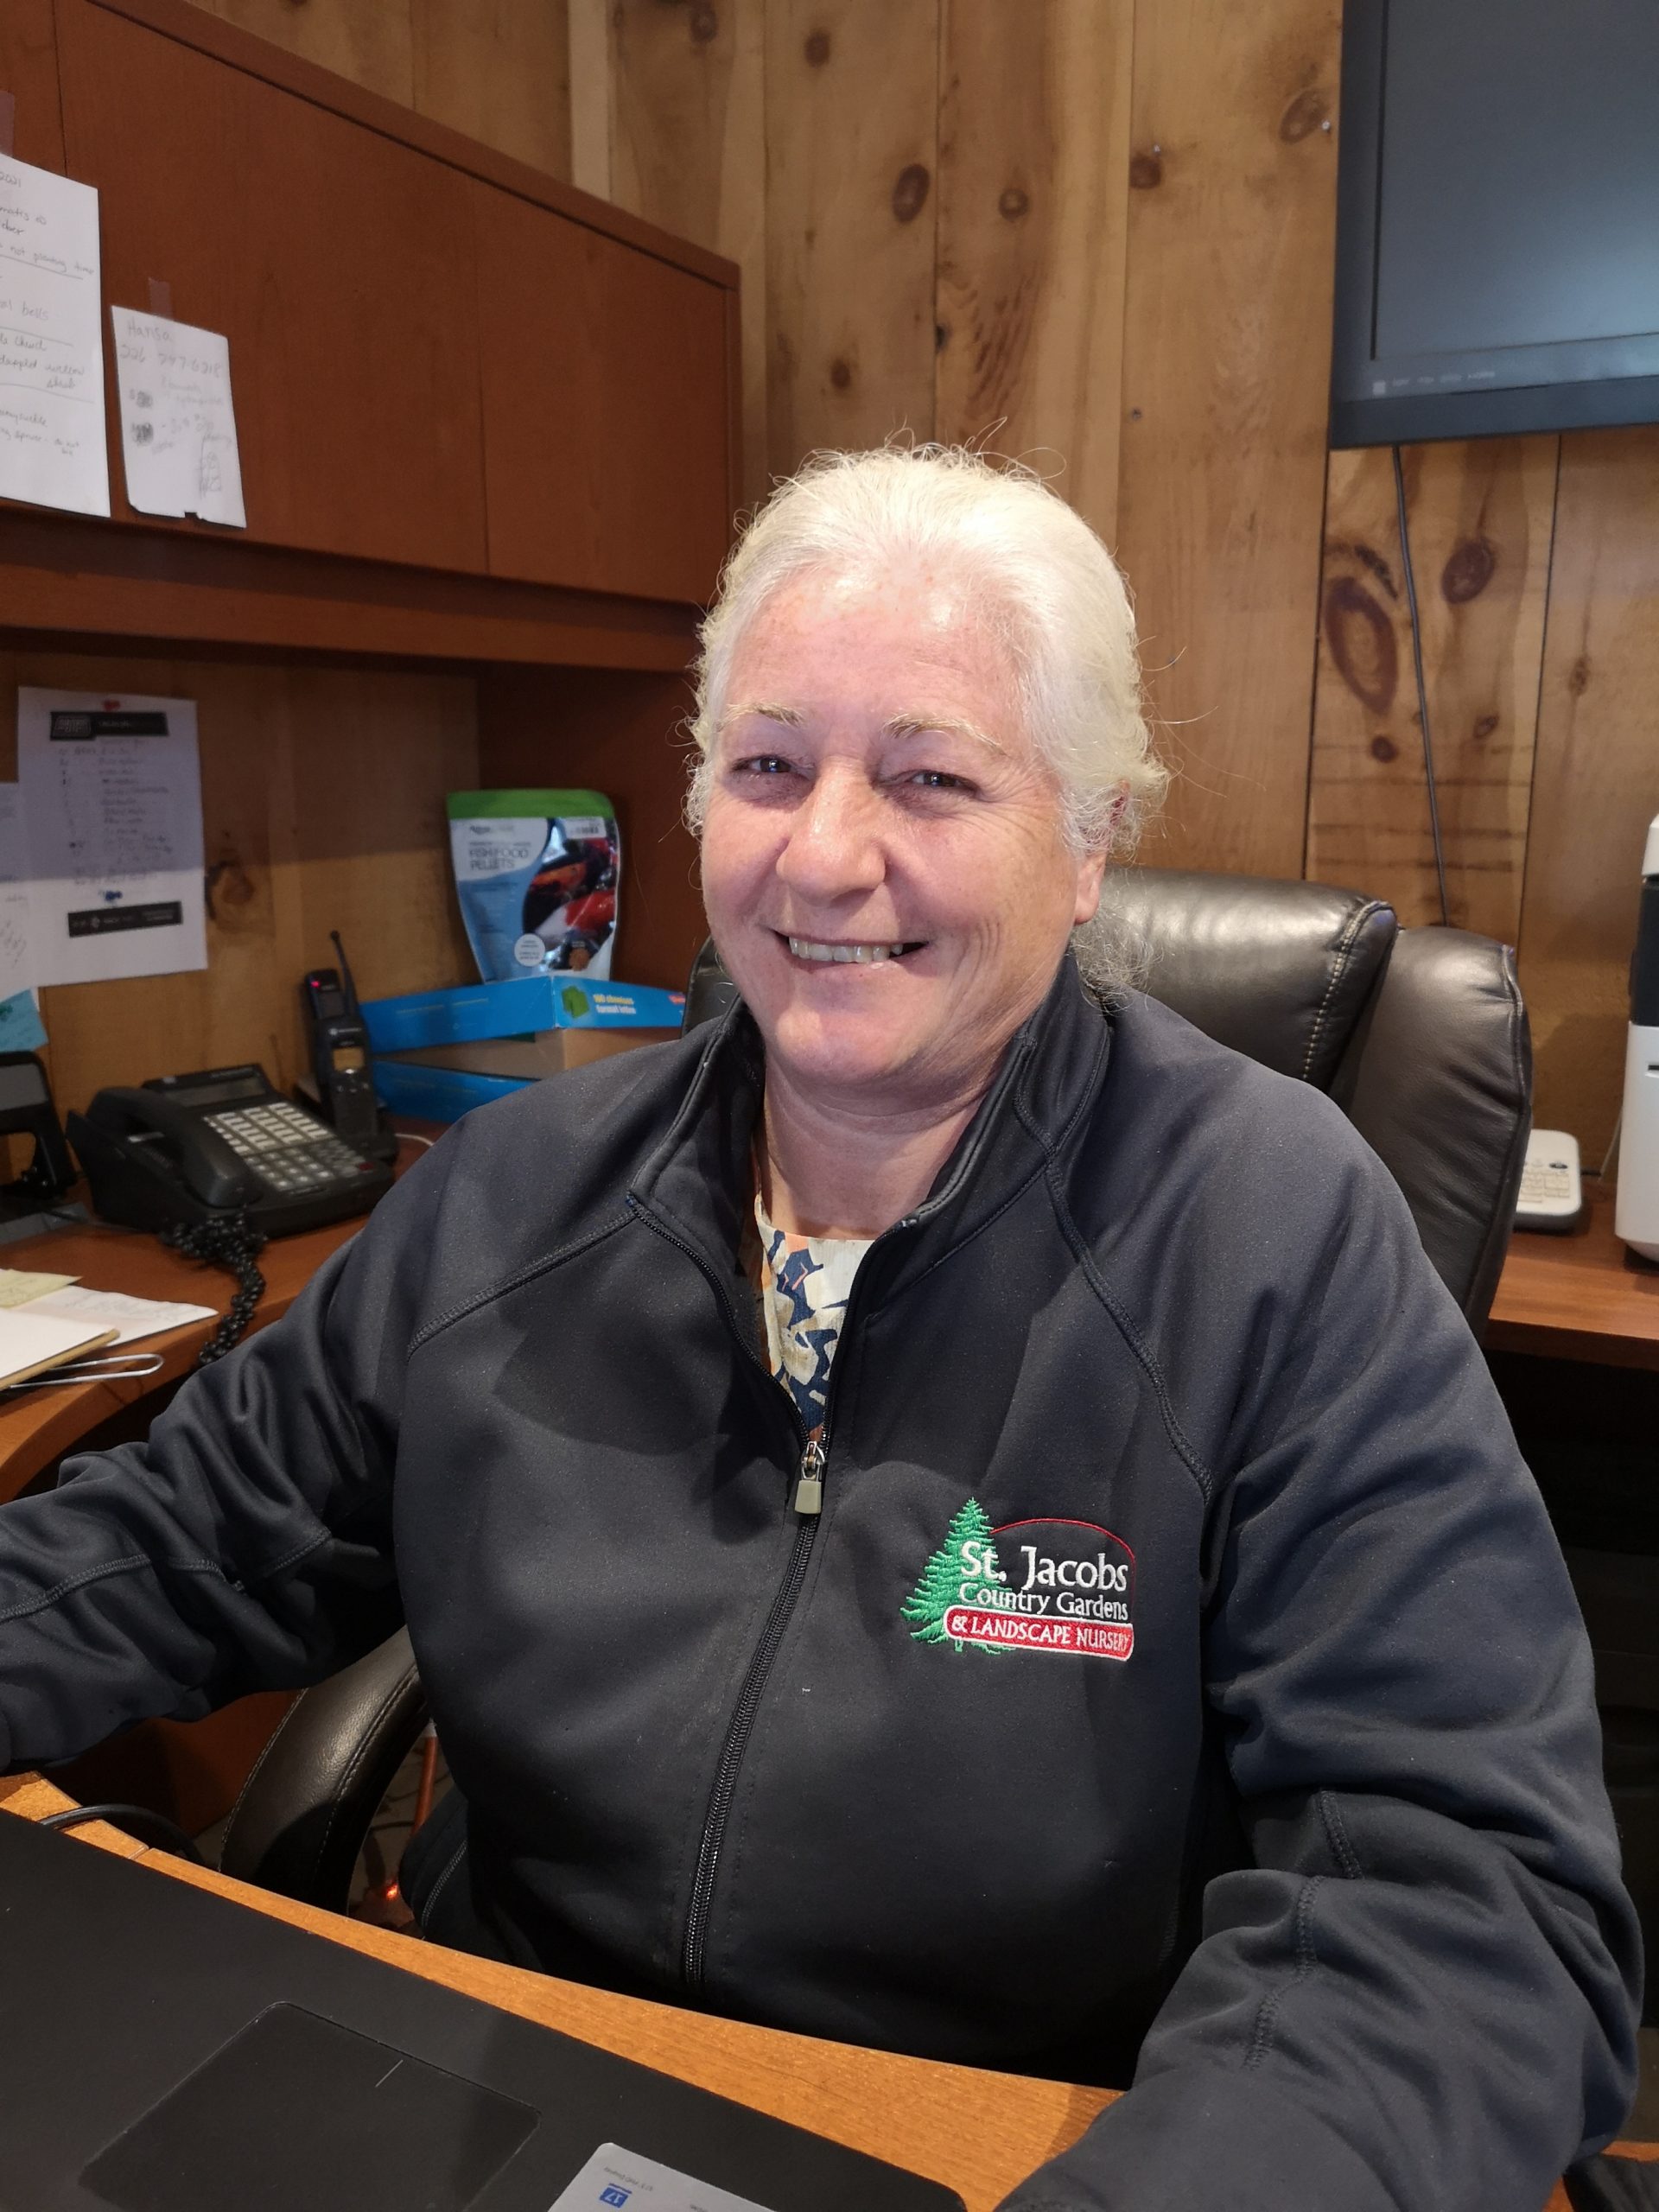 Meet Linda, who runs St Jacobs Country Gardens